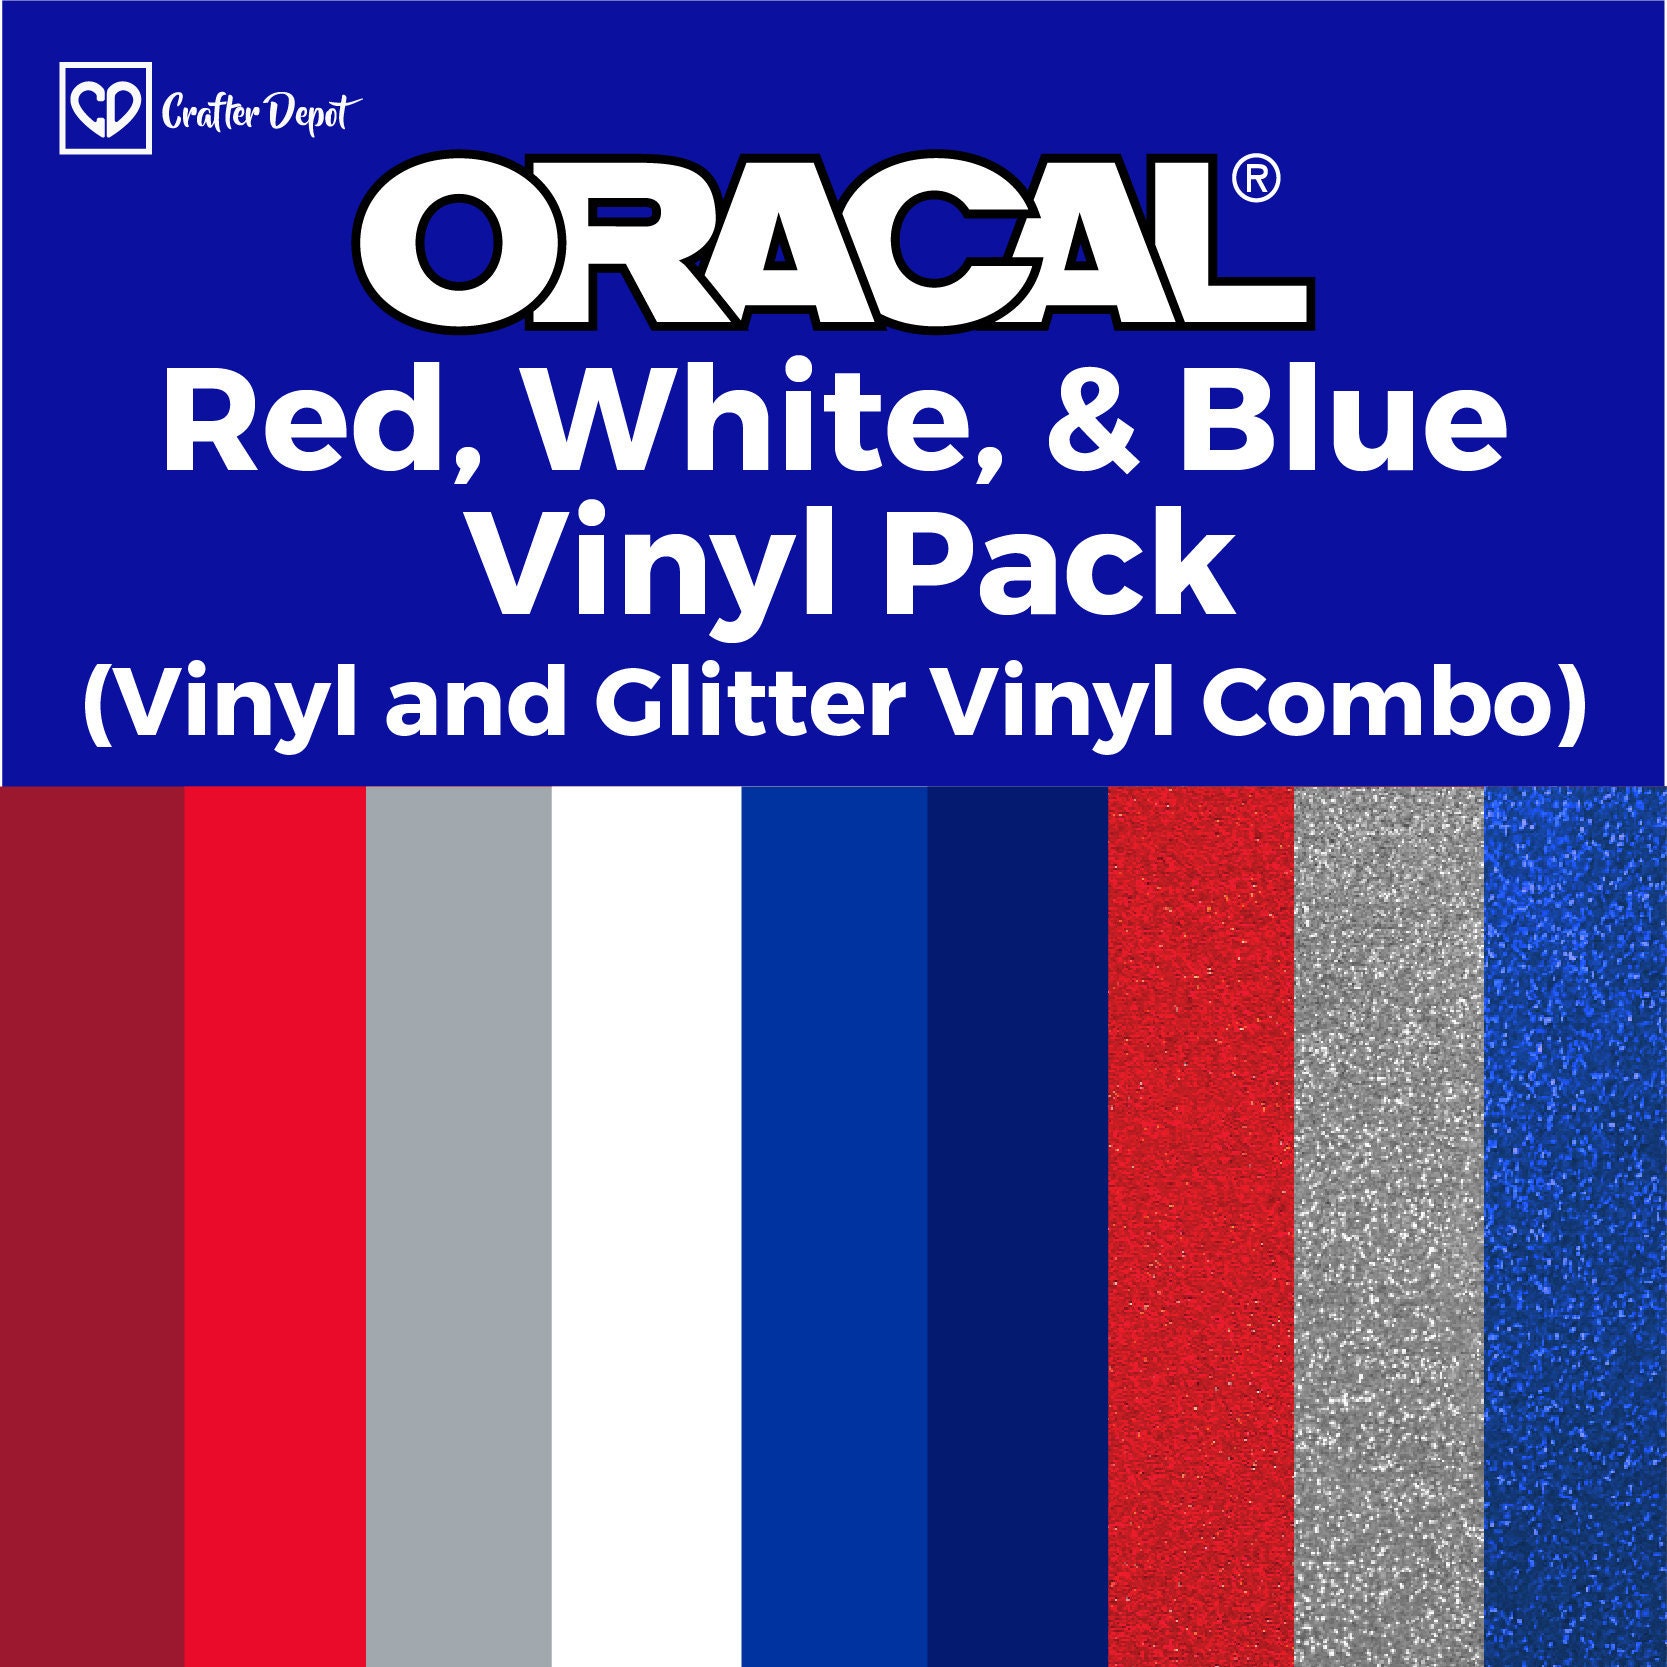 Oracal 651 Vinyl Build a Bundle 6 Foot Rolls